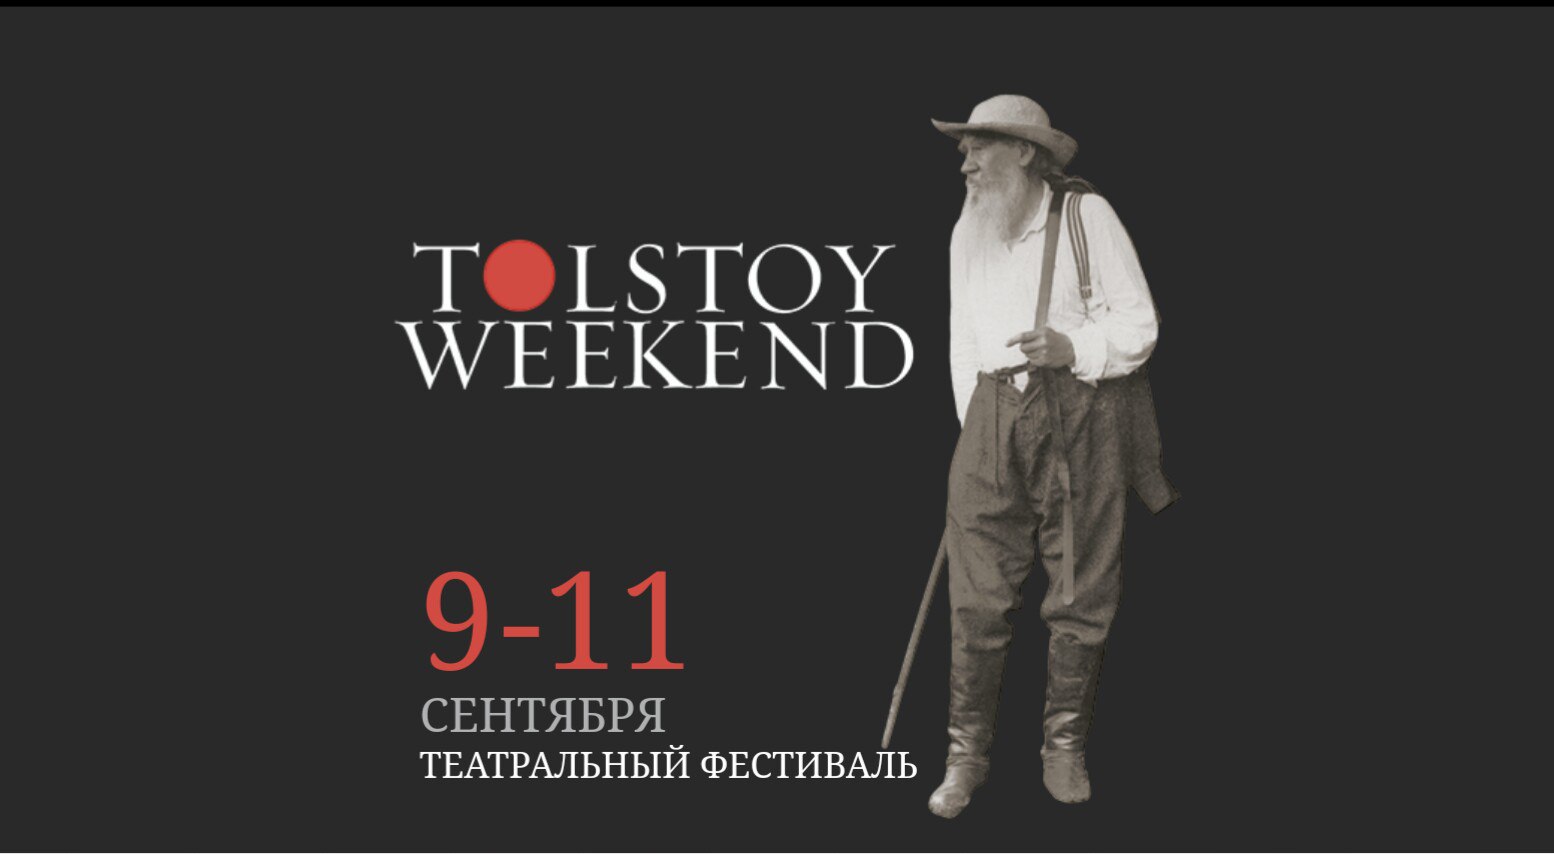 Tolstoy Weekend